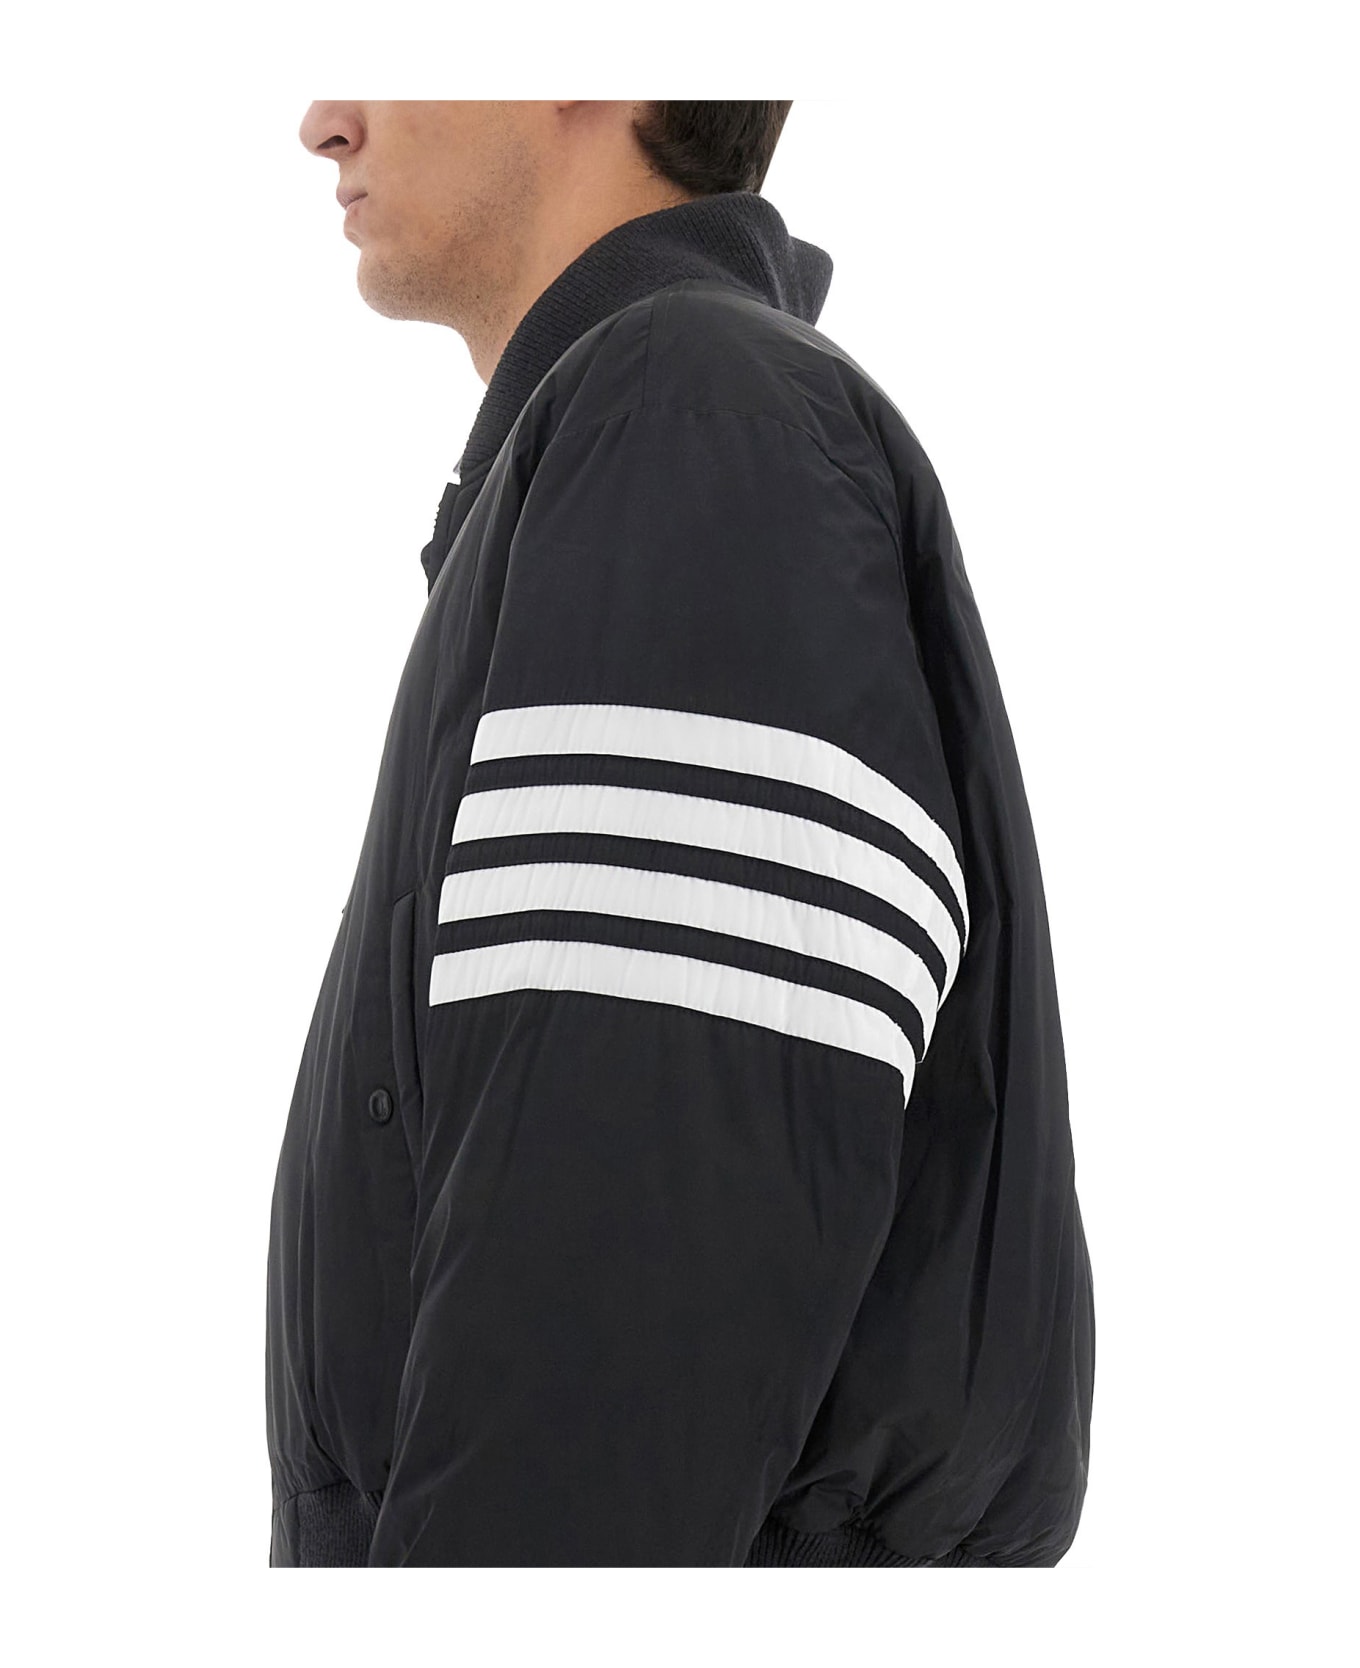 Thom Browne Oversize Jacket - Charcoal